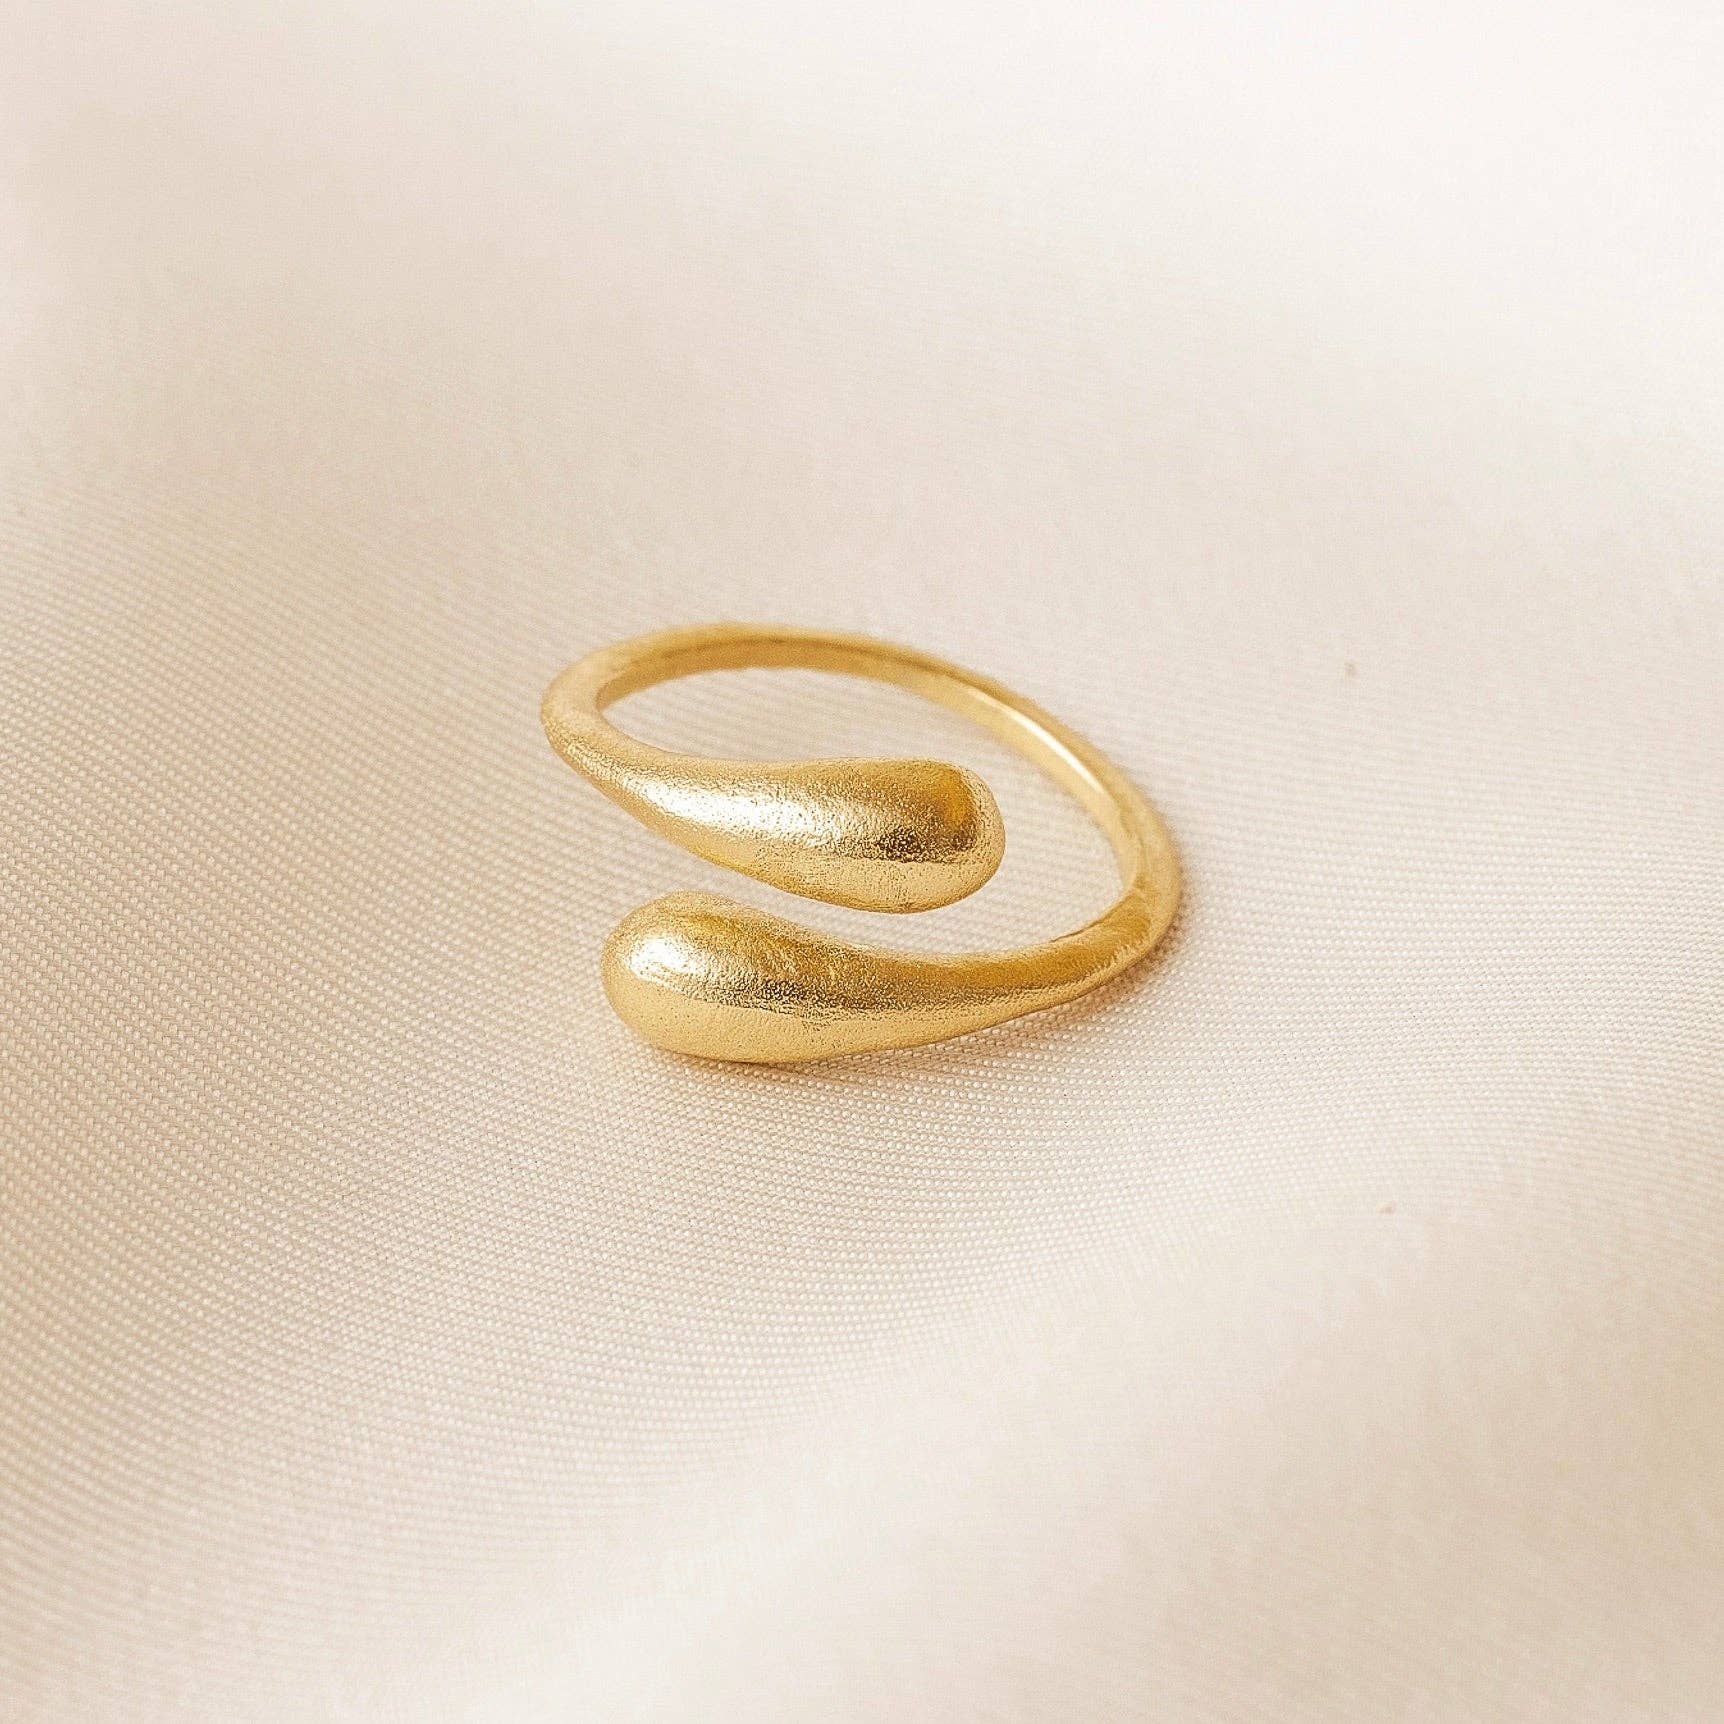 Filippa Ring | Jewelry Gold Gift Waterproof